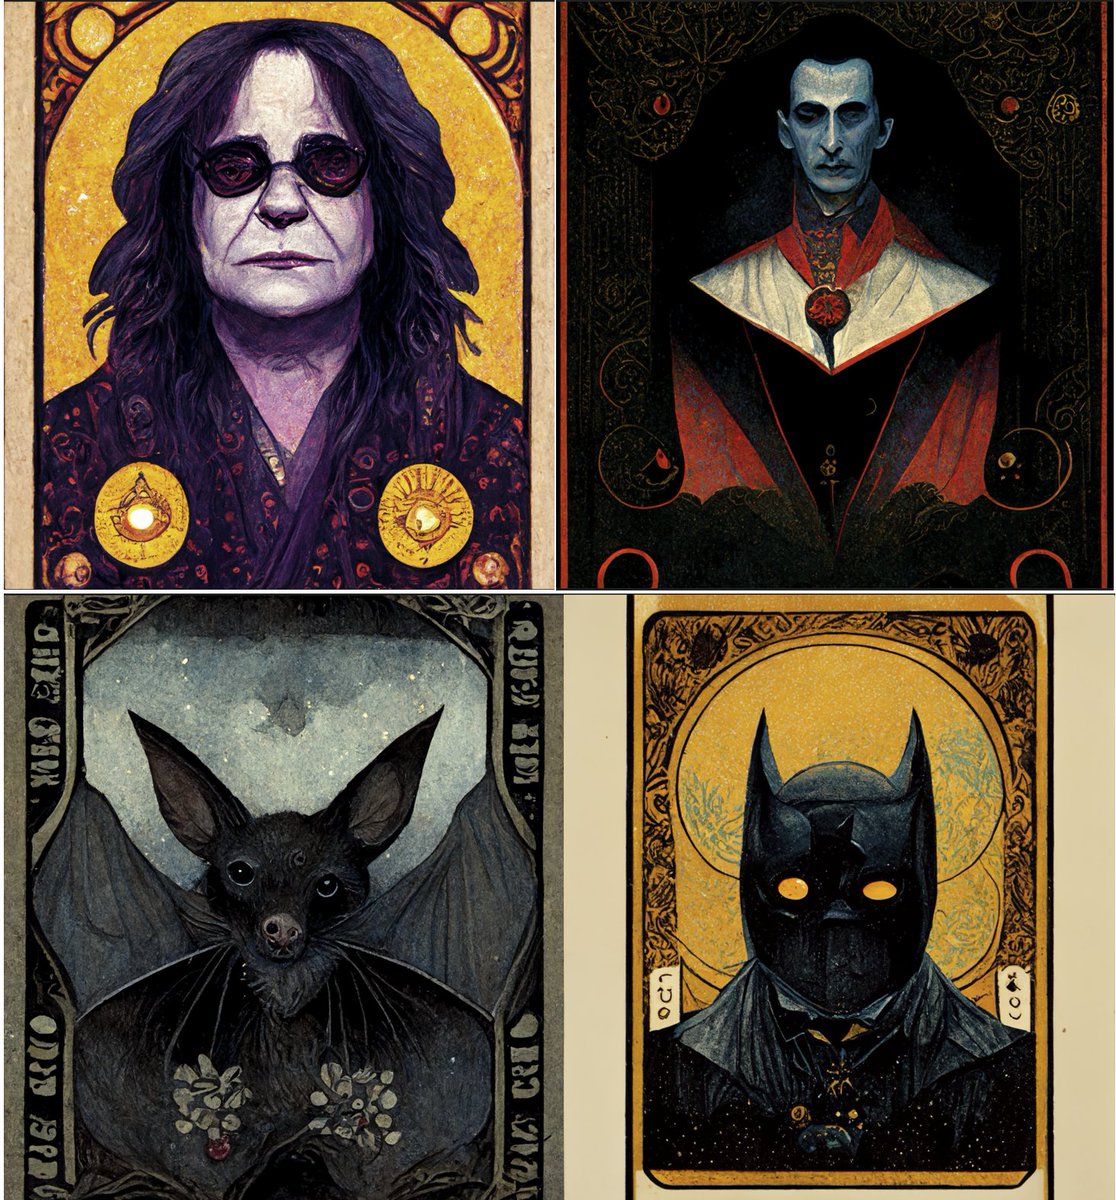 My entry into #CryptoBatzHalloween from @CryptoBatzNFT is art of the four great Bats (Ozzy, Dracula, ManBat, Batman).